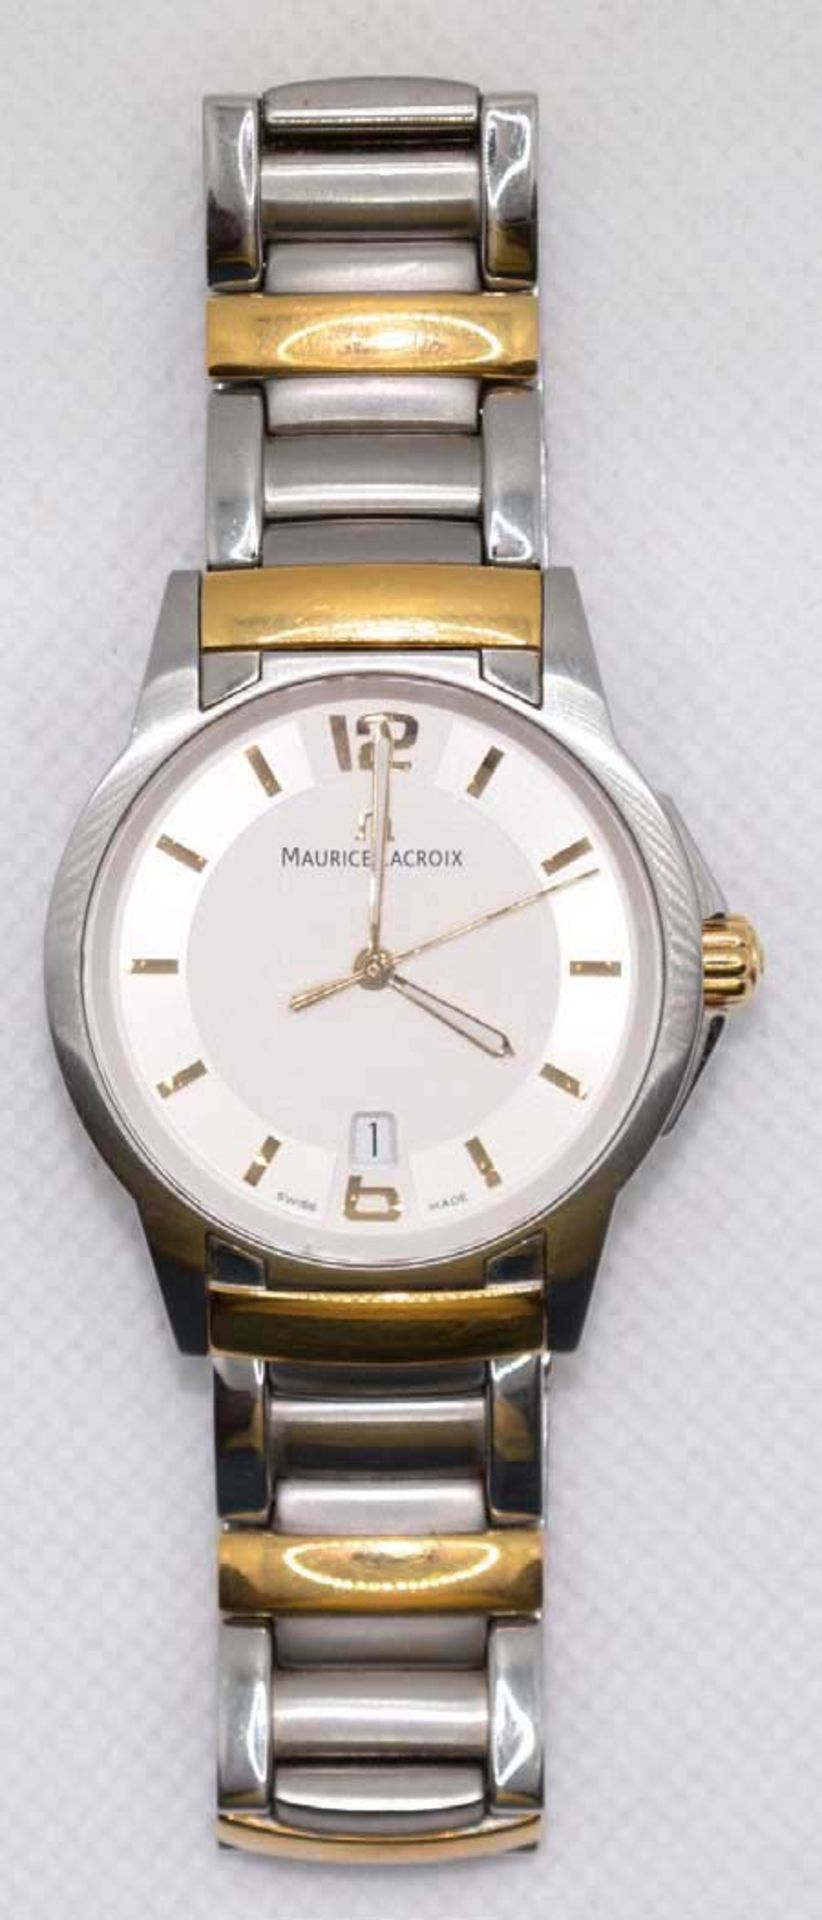 Armbanduhr "Maurice Lacroix", Quarzwerk, Edelstahl, partiell vergoldet, phosphoreszierende Zeiger,